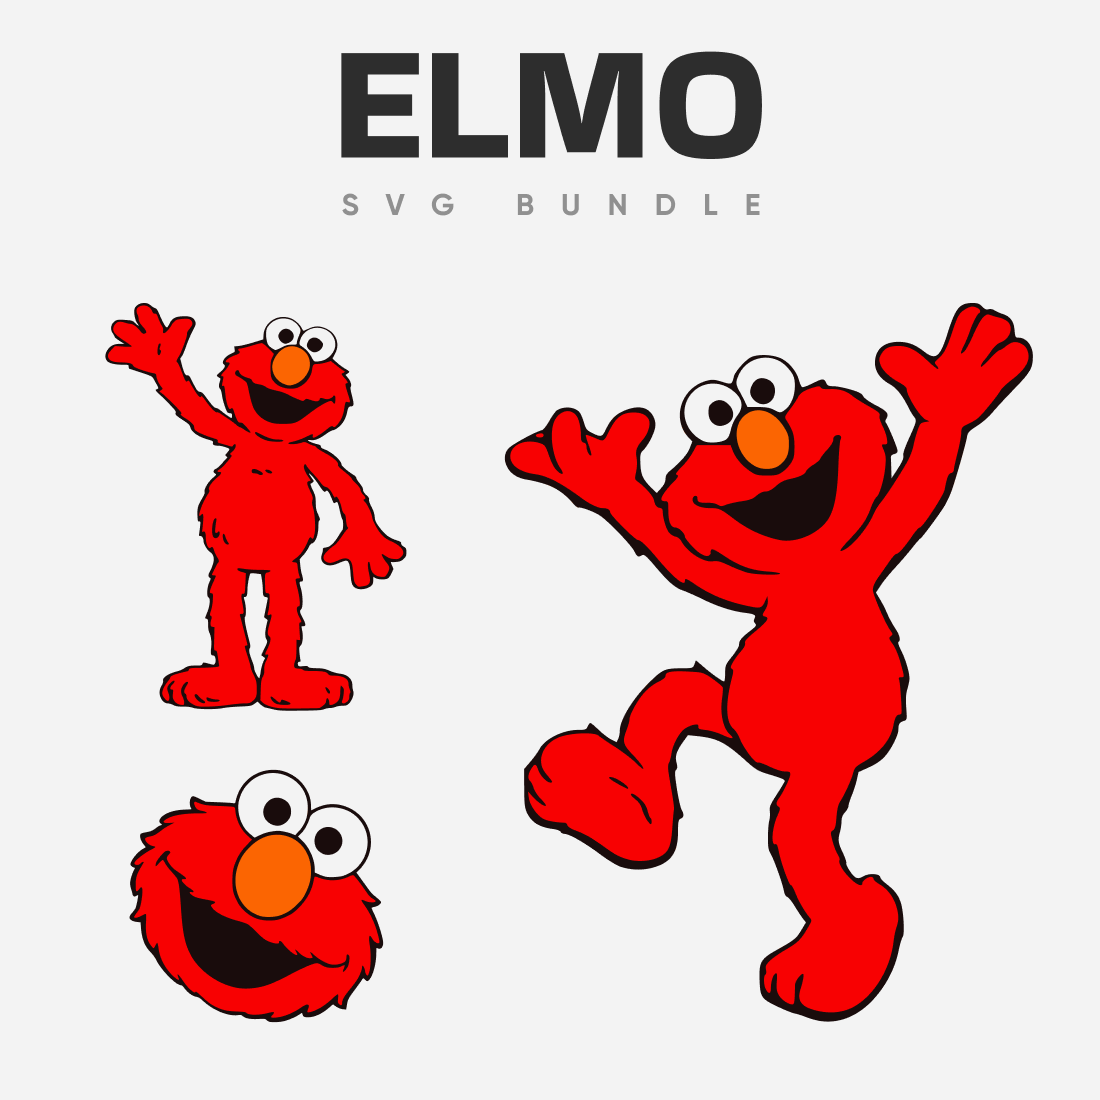 Elmo SVG bundle.